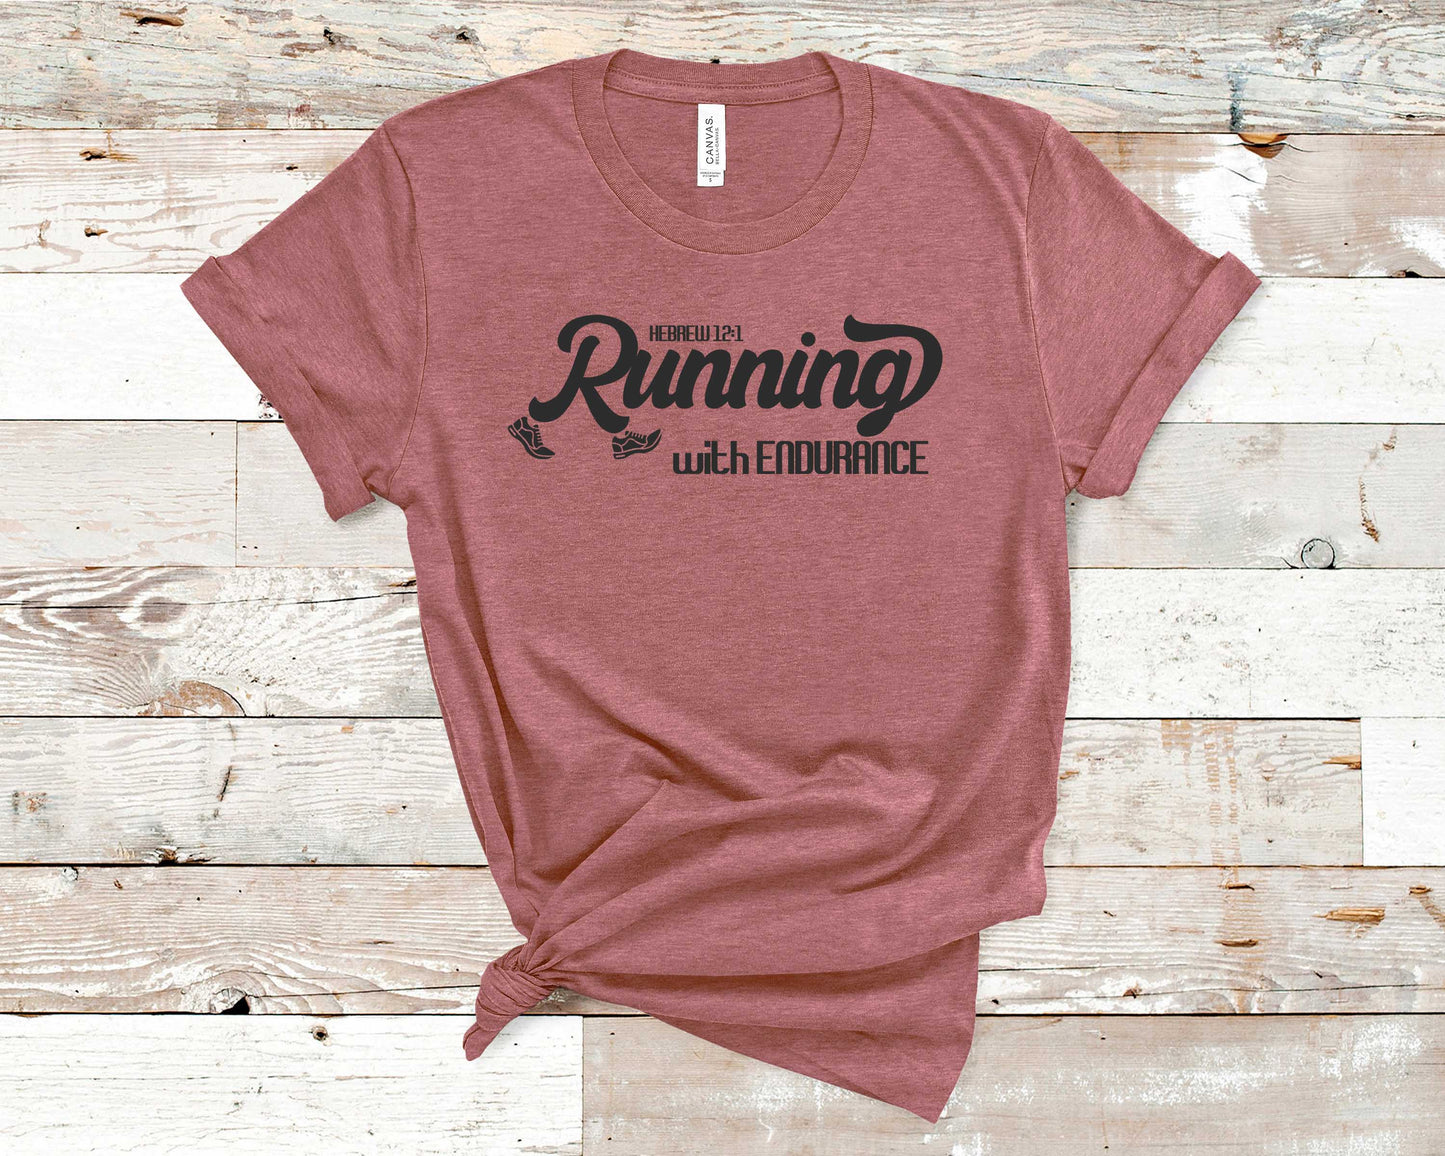 Running with Endurance - Fitness Shirt